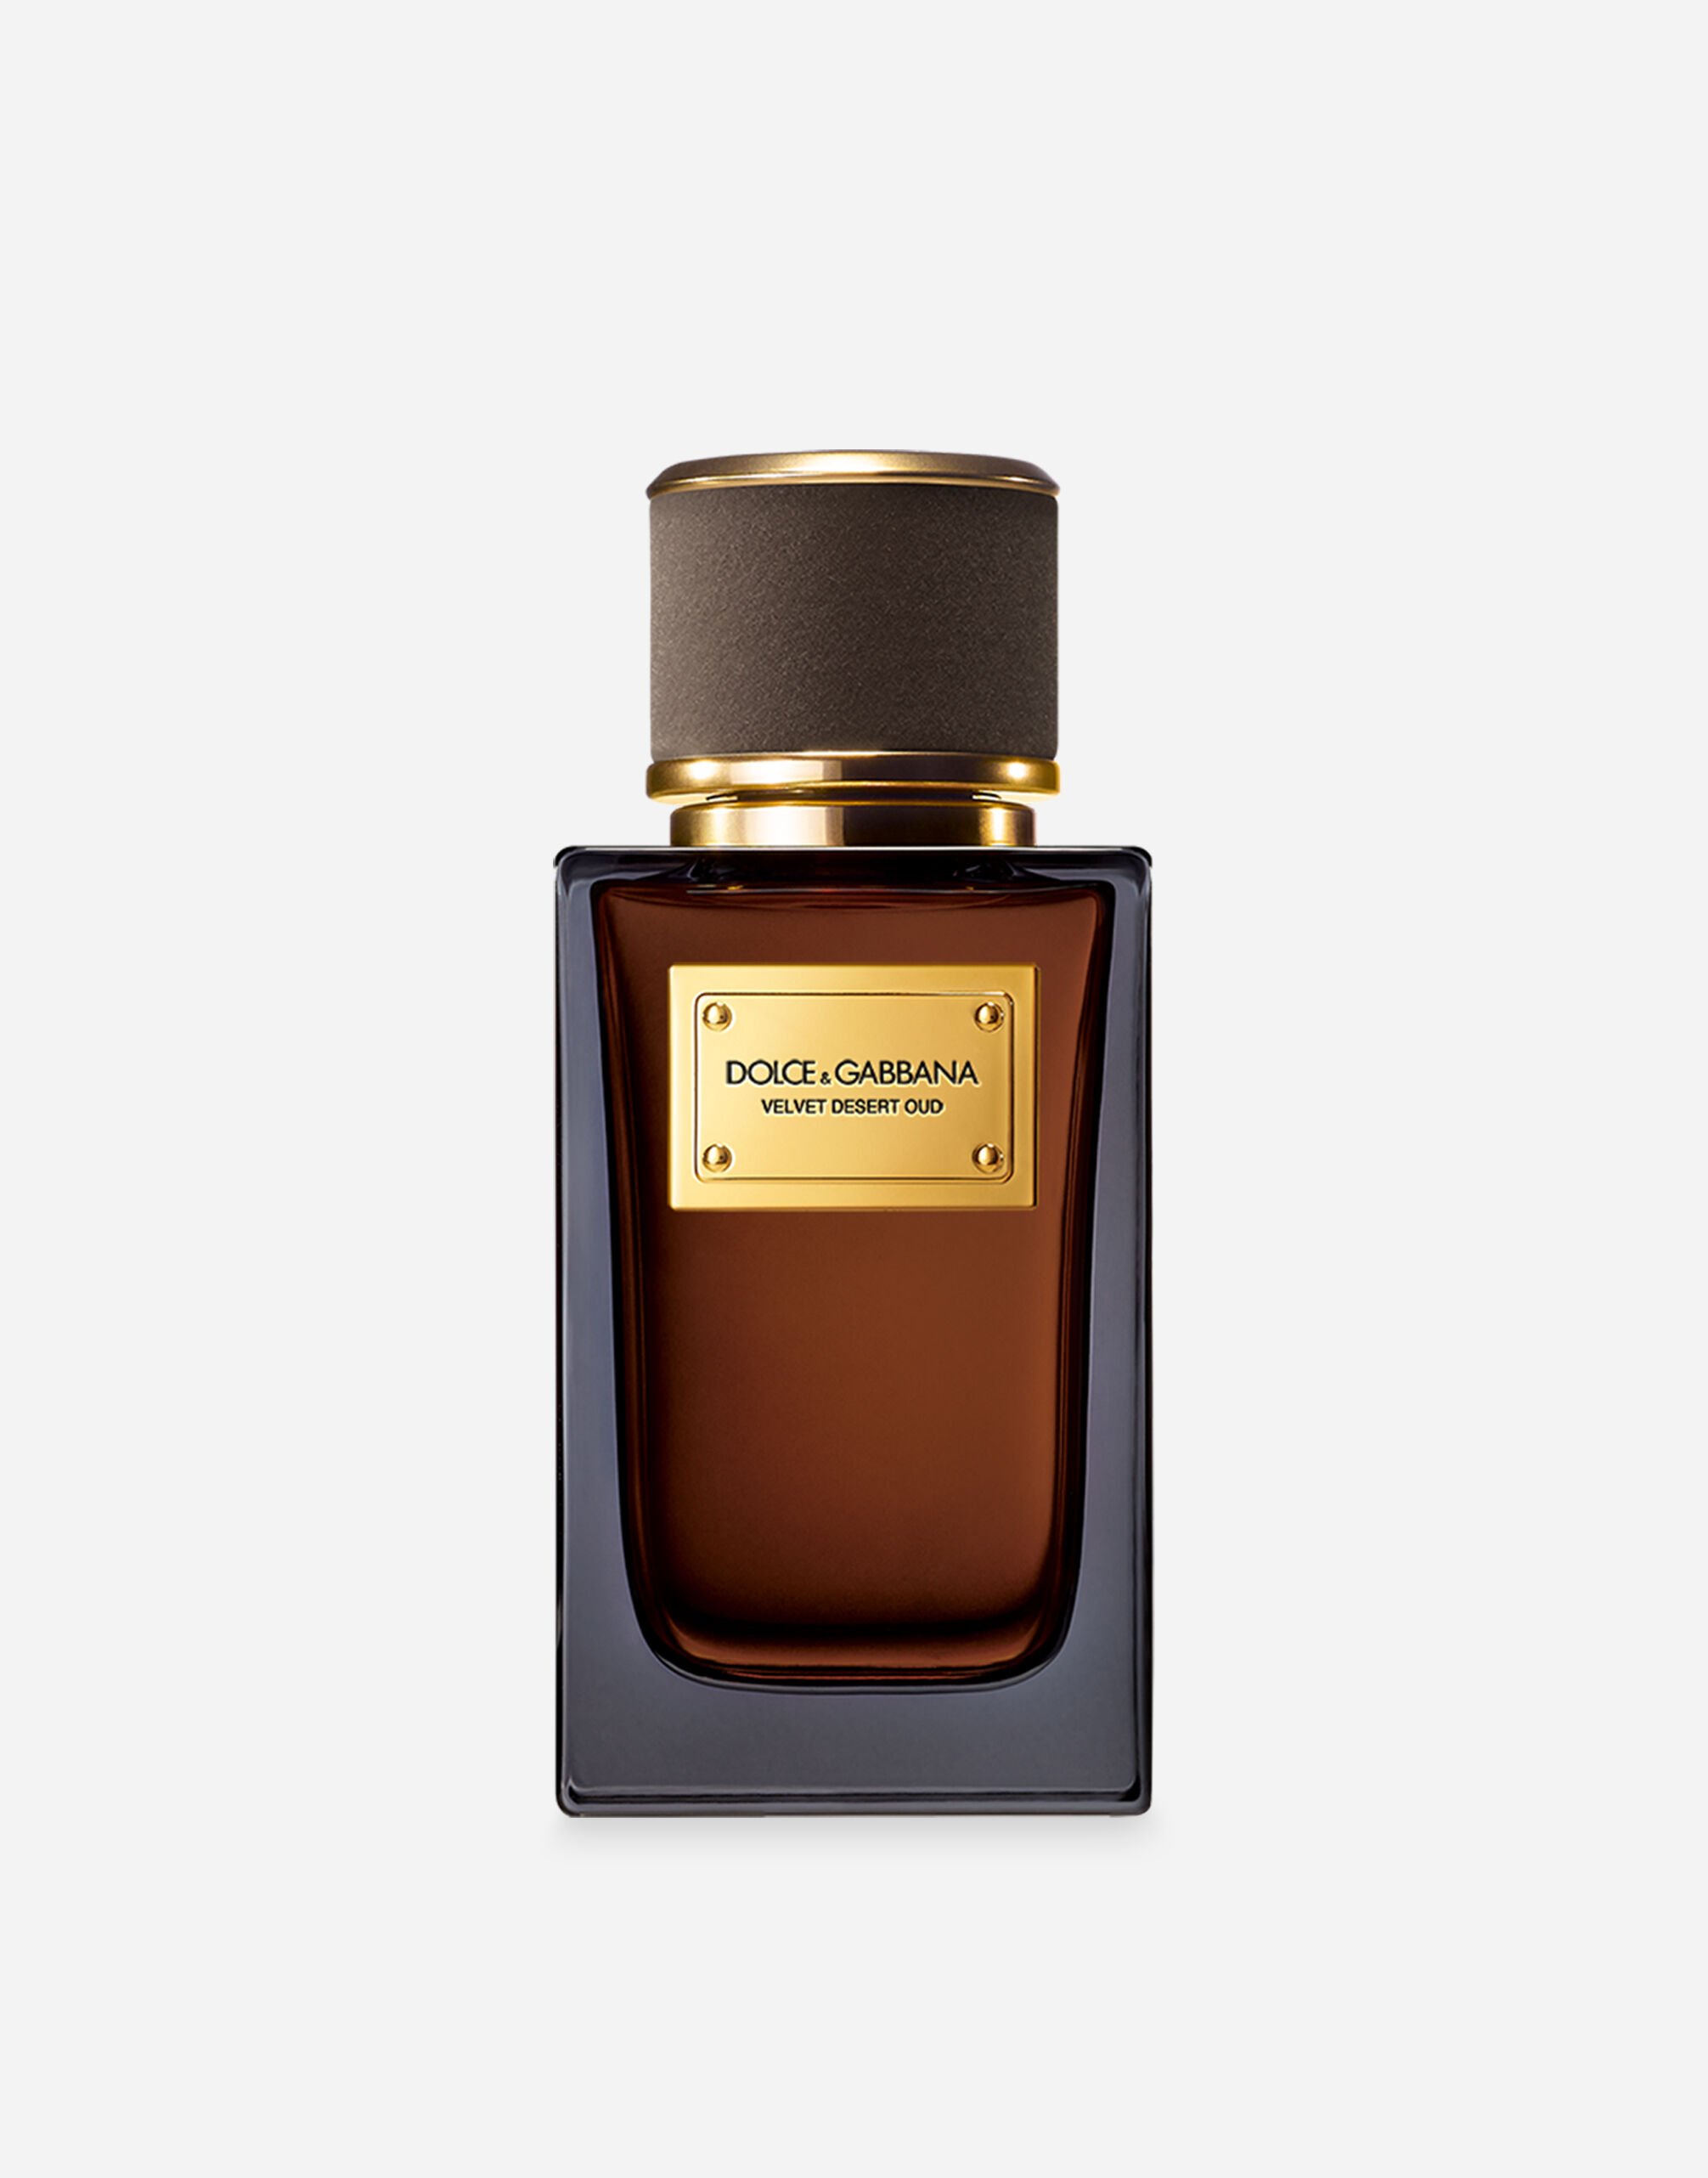 Dolce & Gabbana Velvet Desert Oud Eau de Parfum - VT001KVT000